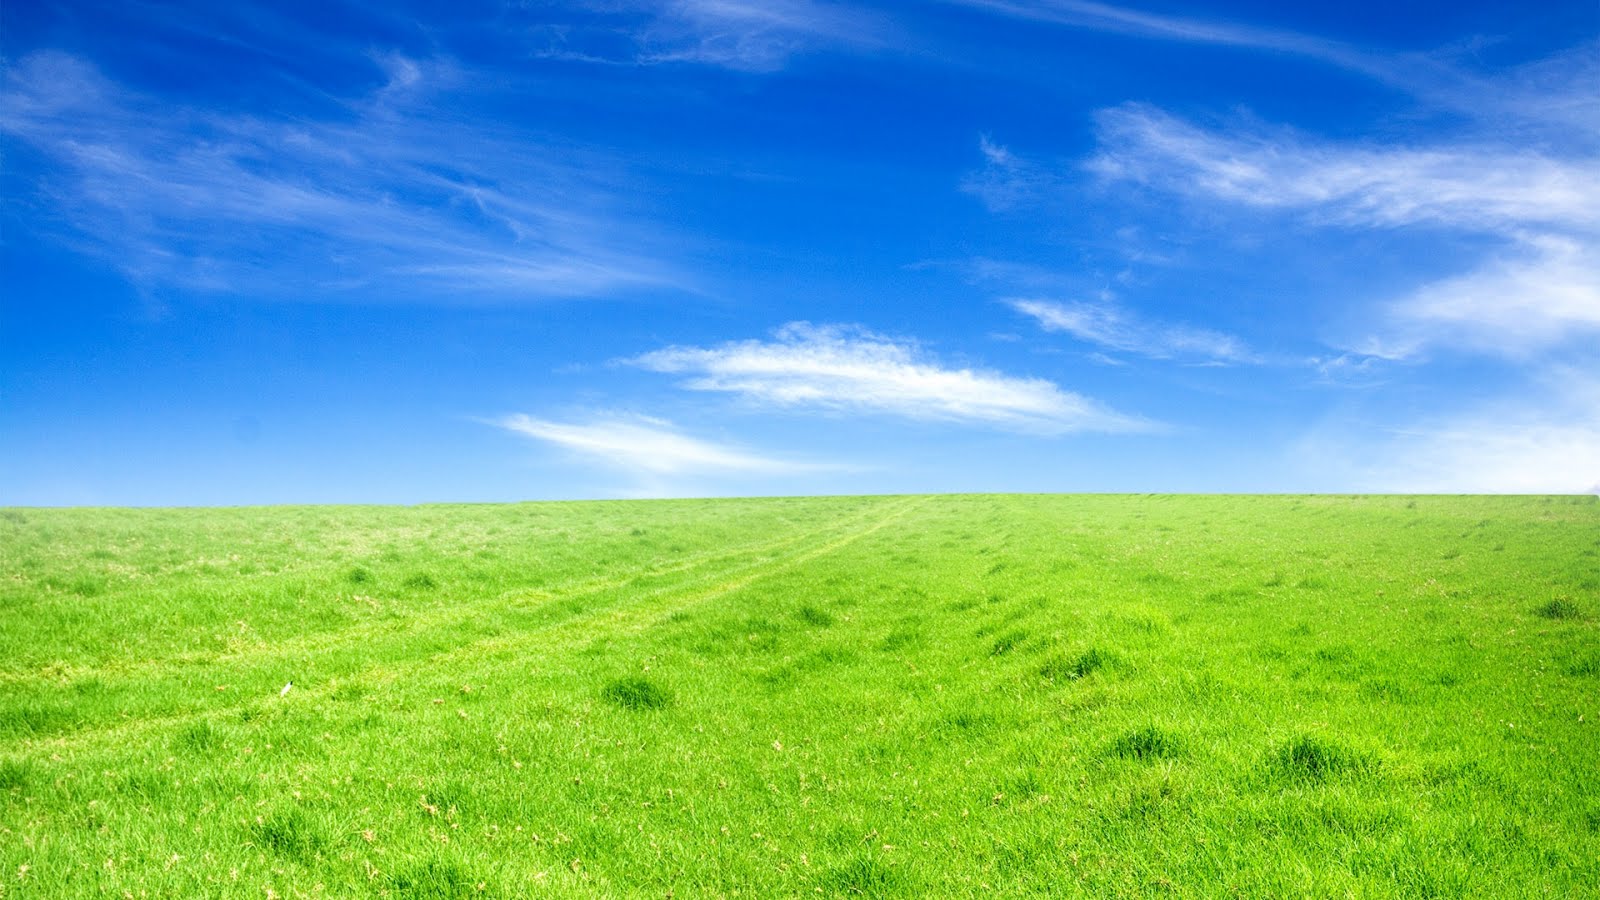 Sky Grass Field backgrounds